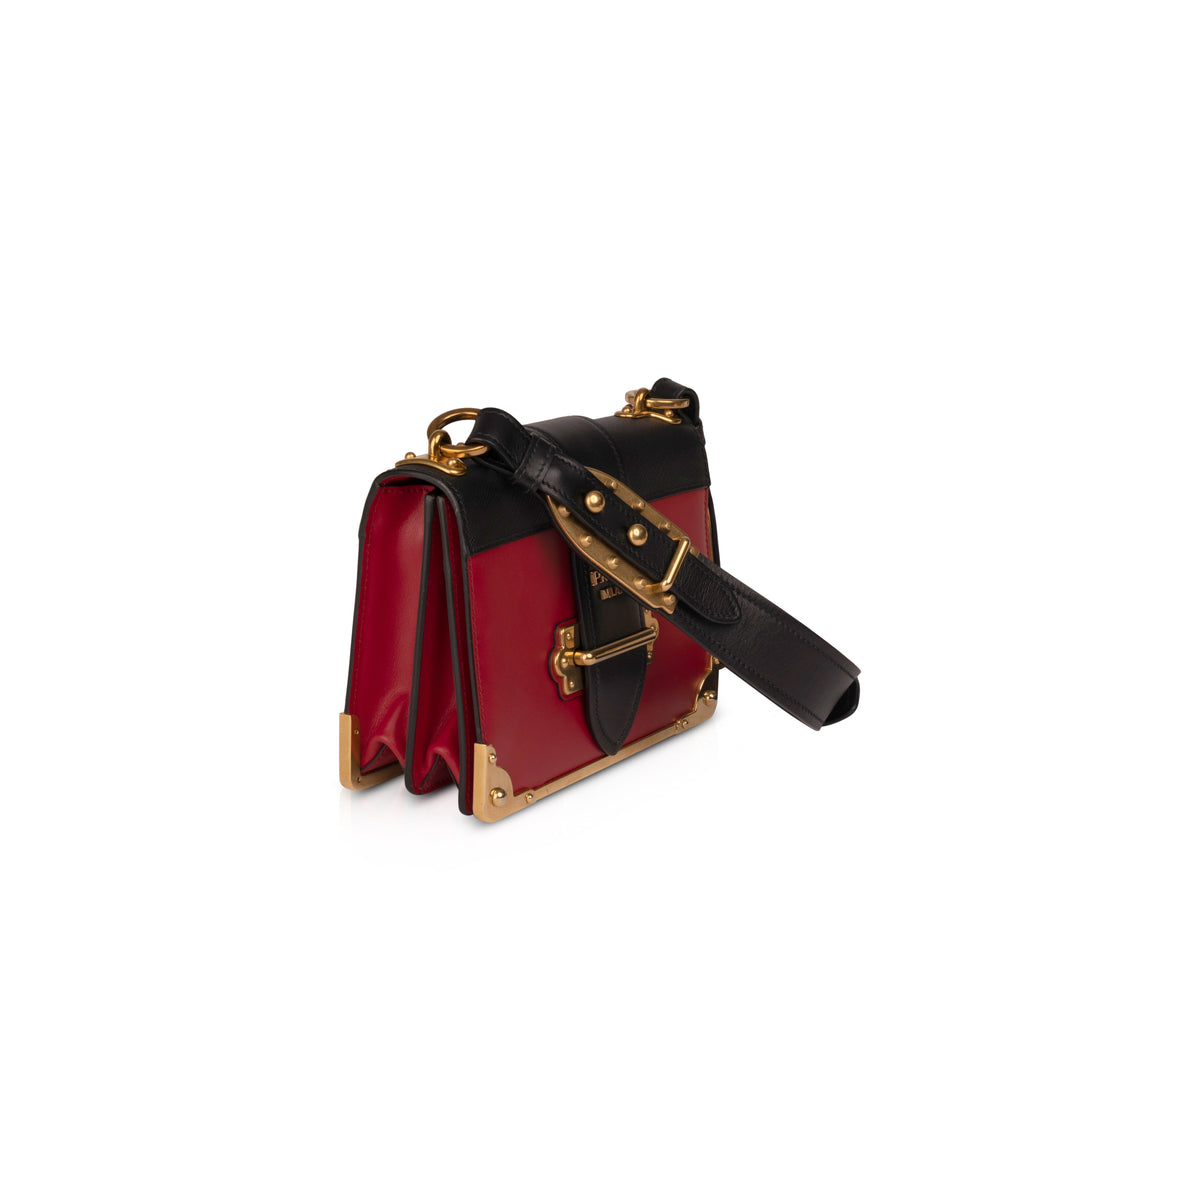 Cahier leather crossbody bag